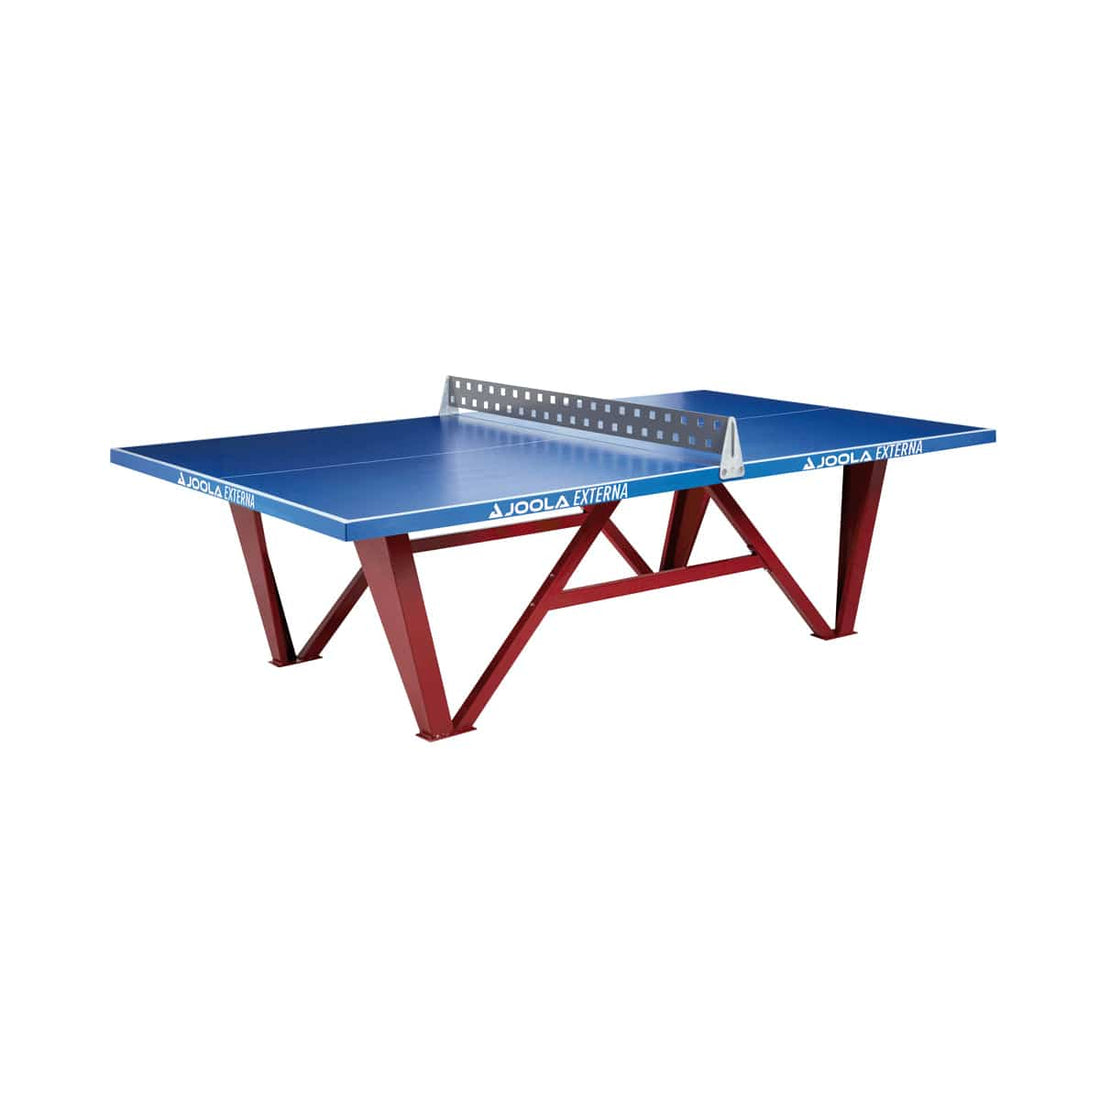 JOOLA EXTERNA Outdoor Table Tennis Table - Atomic Game Store